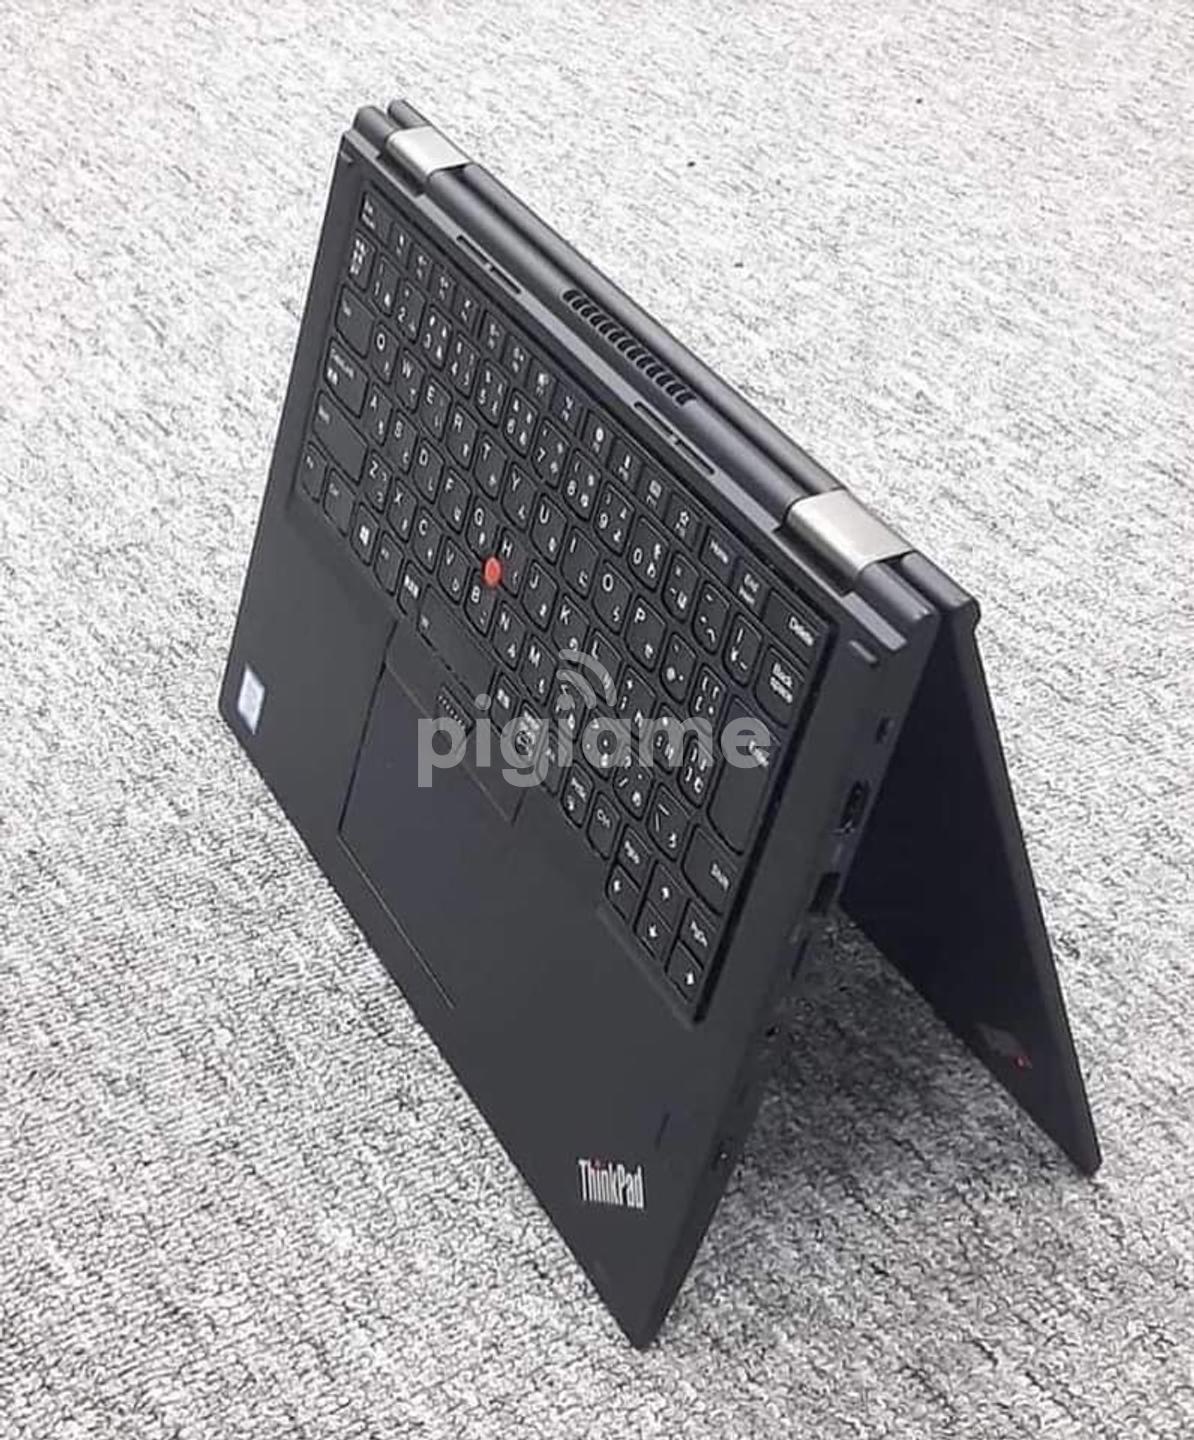 Lenovo ThinkPad Yoga 370 13.3 Touchscreen LCD 2 in 1 Notebook